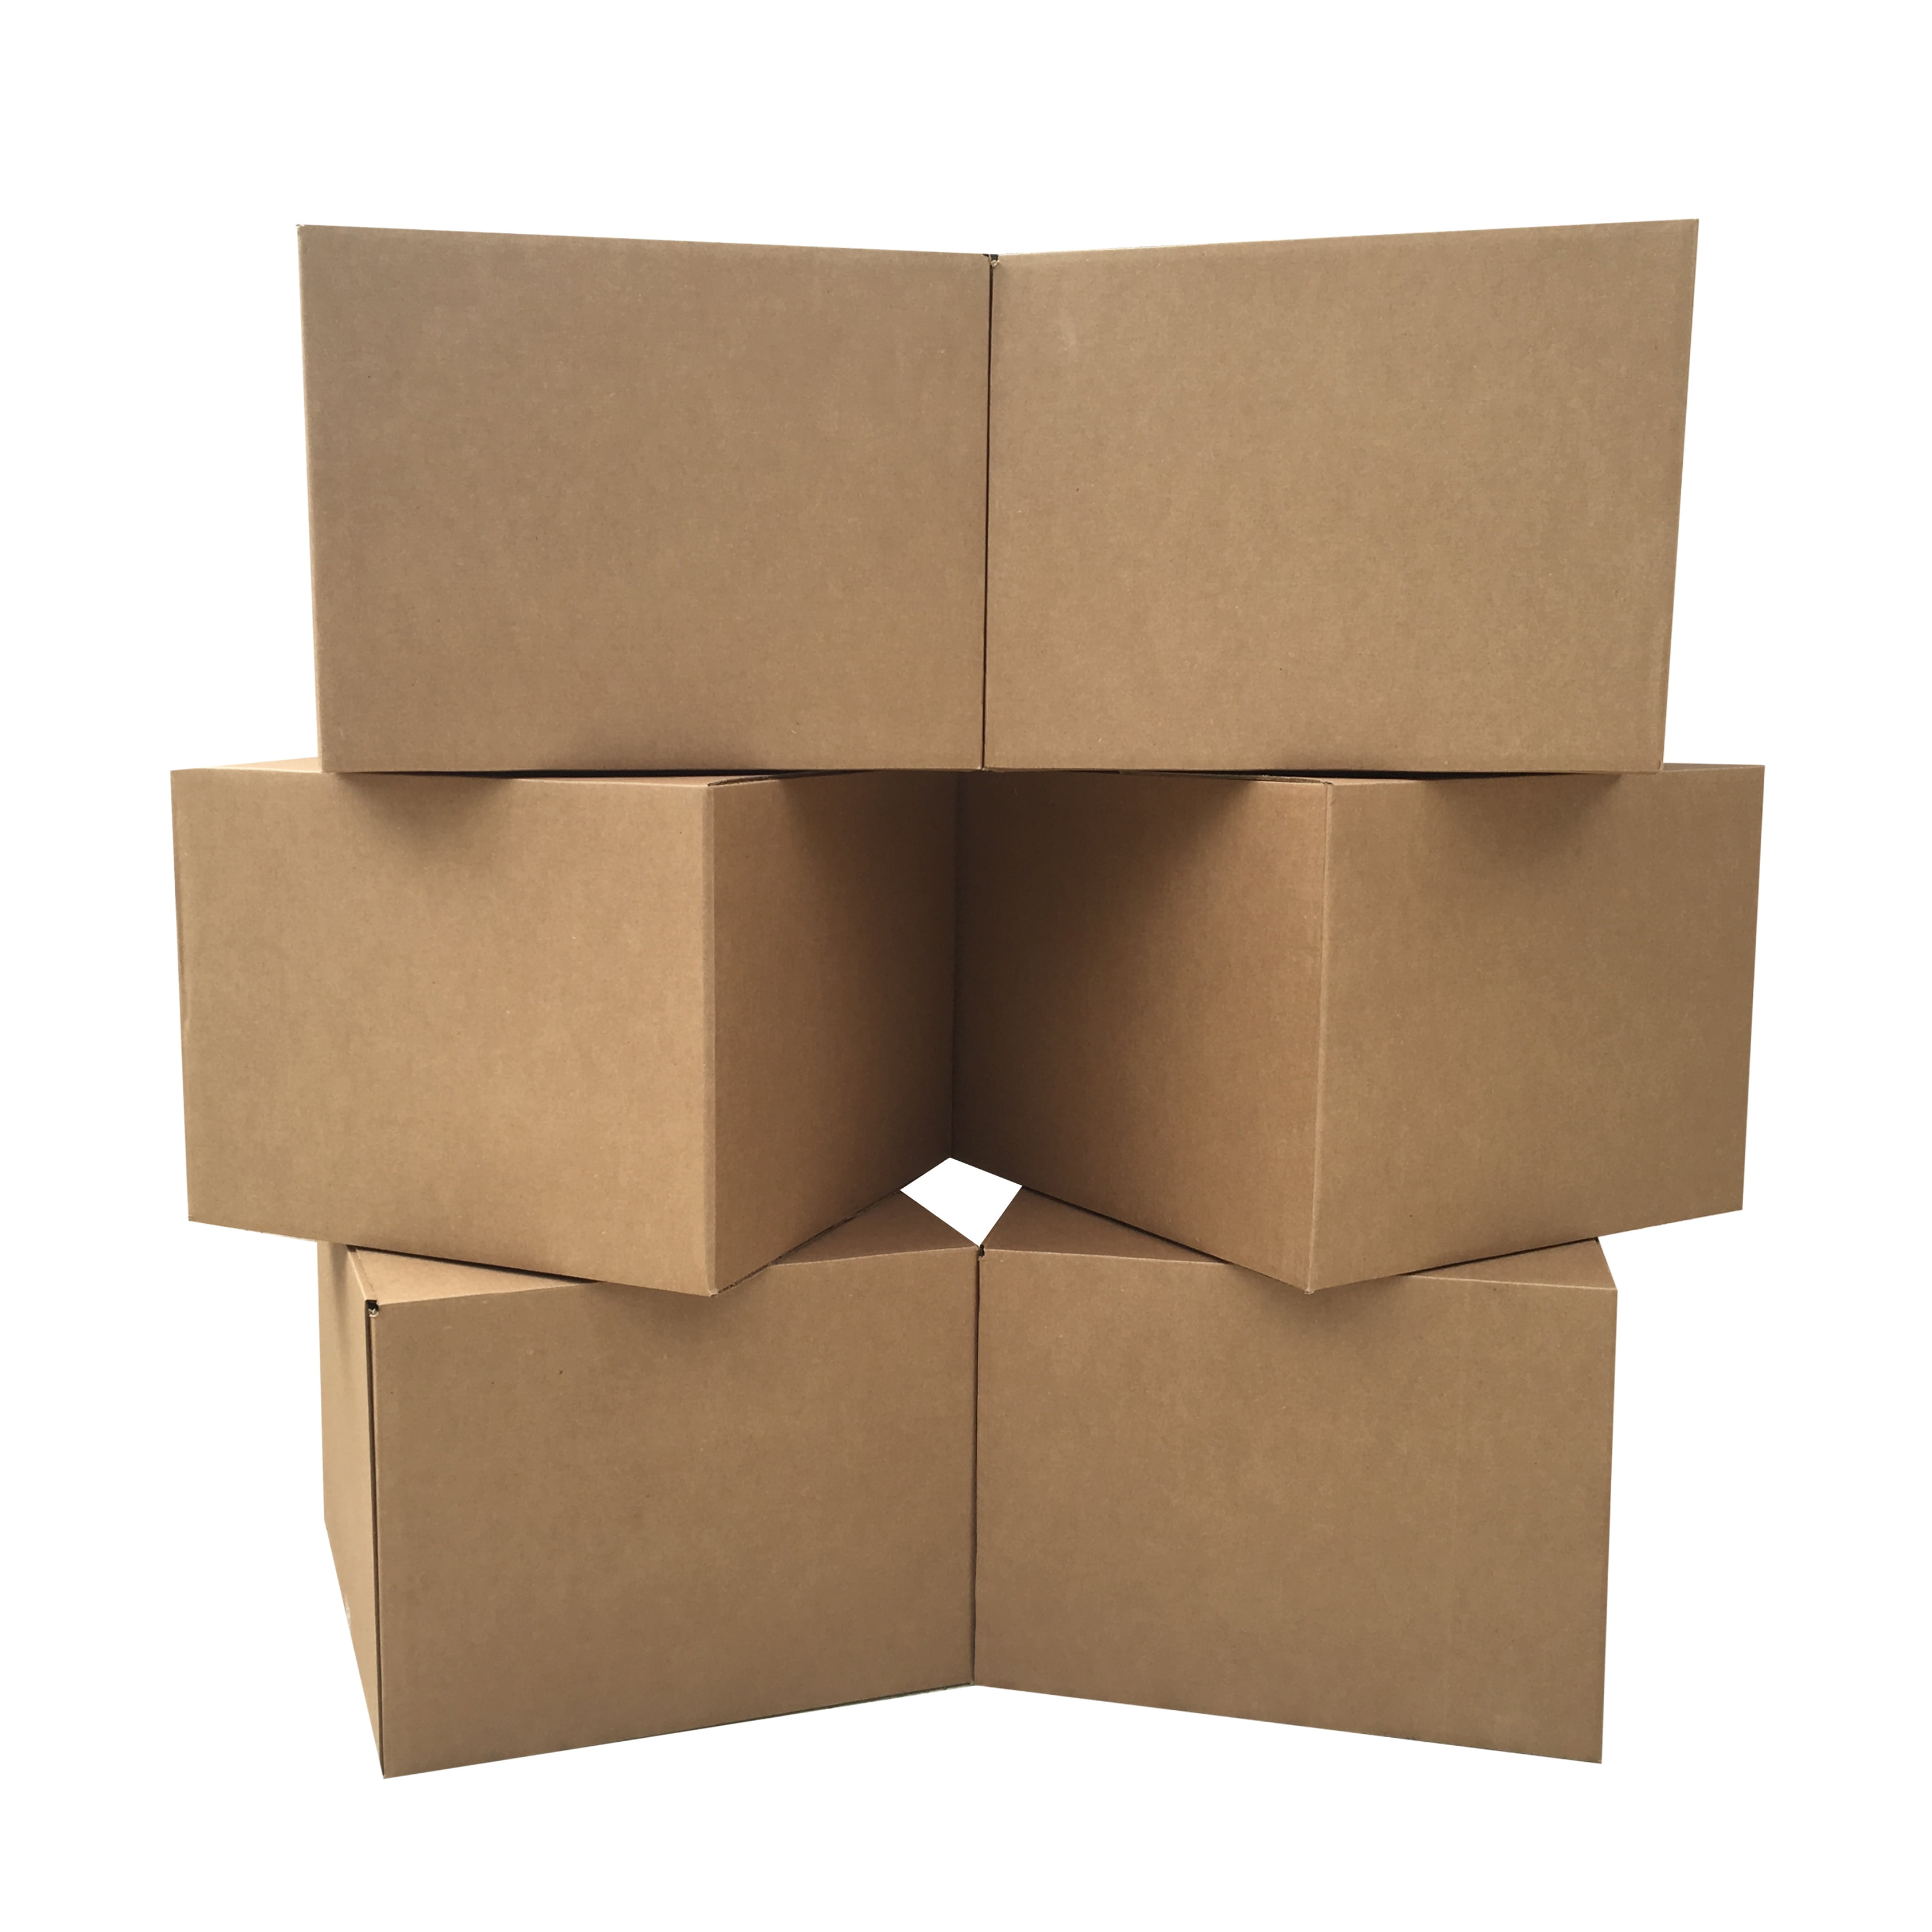 Re-Ment MAKEUP Dresser BOX Complete Box Set of 8 pcs 【Sep 20】 